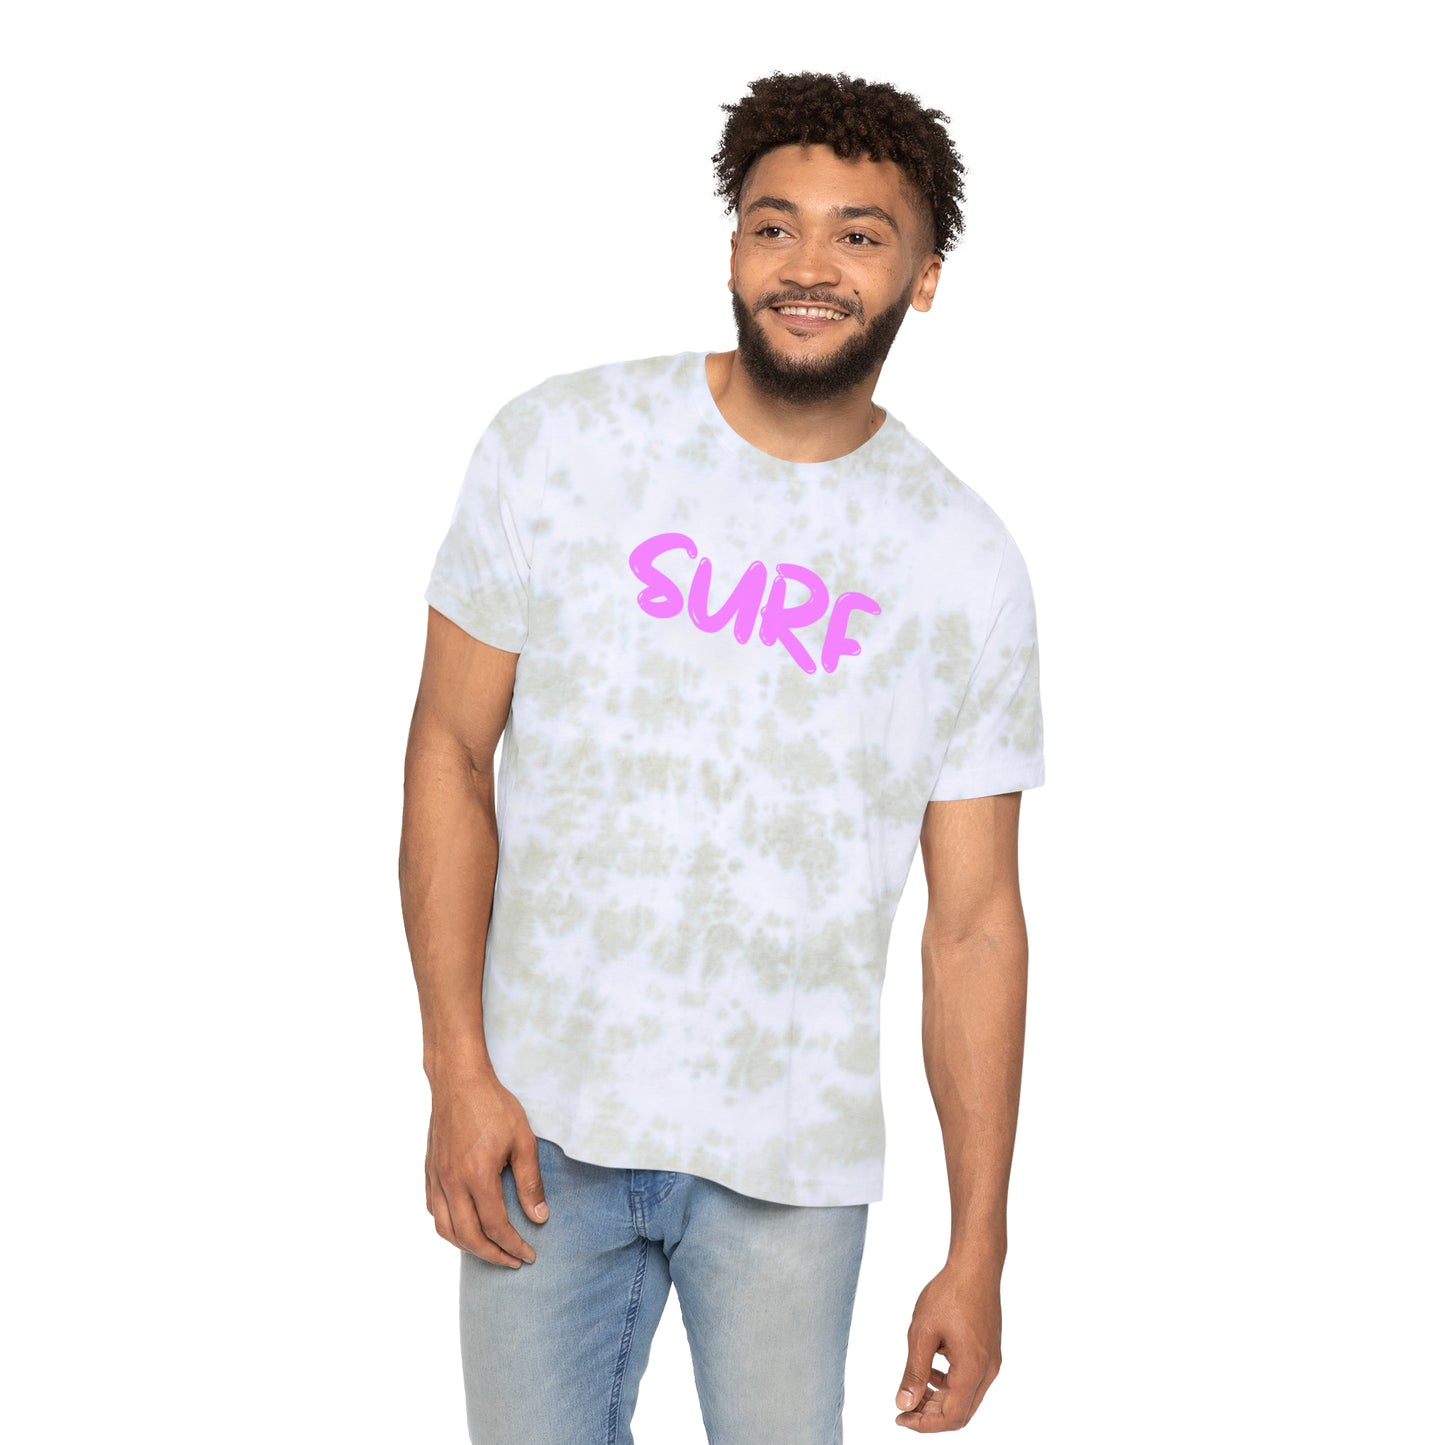 SURF, Unisex FWD Fashion Tie-Dyed T-Shirt